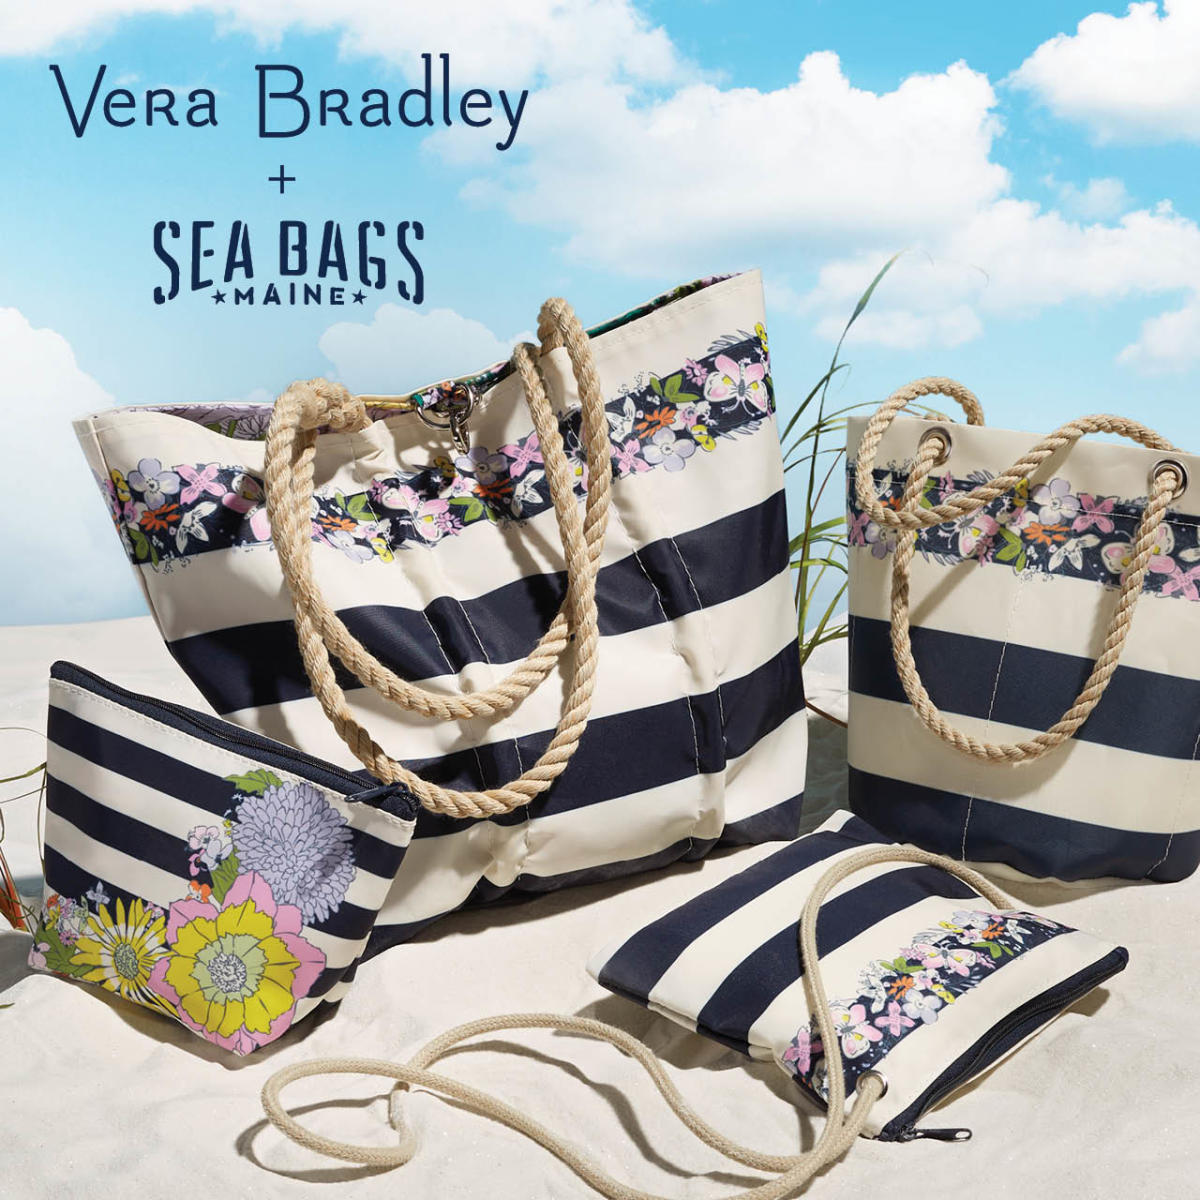 Eco-Friendly Travel Bag: Vera Bradley ReActive Tote Bag